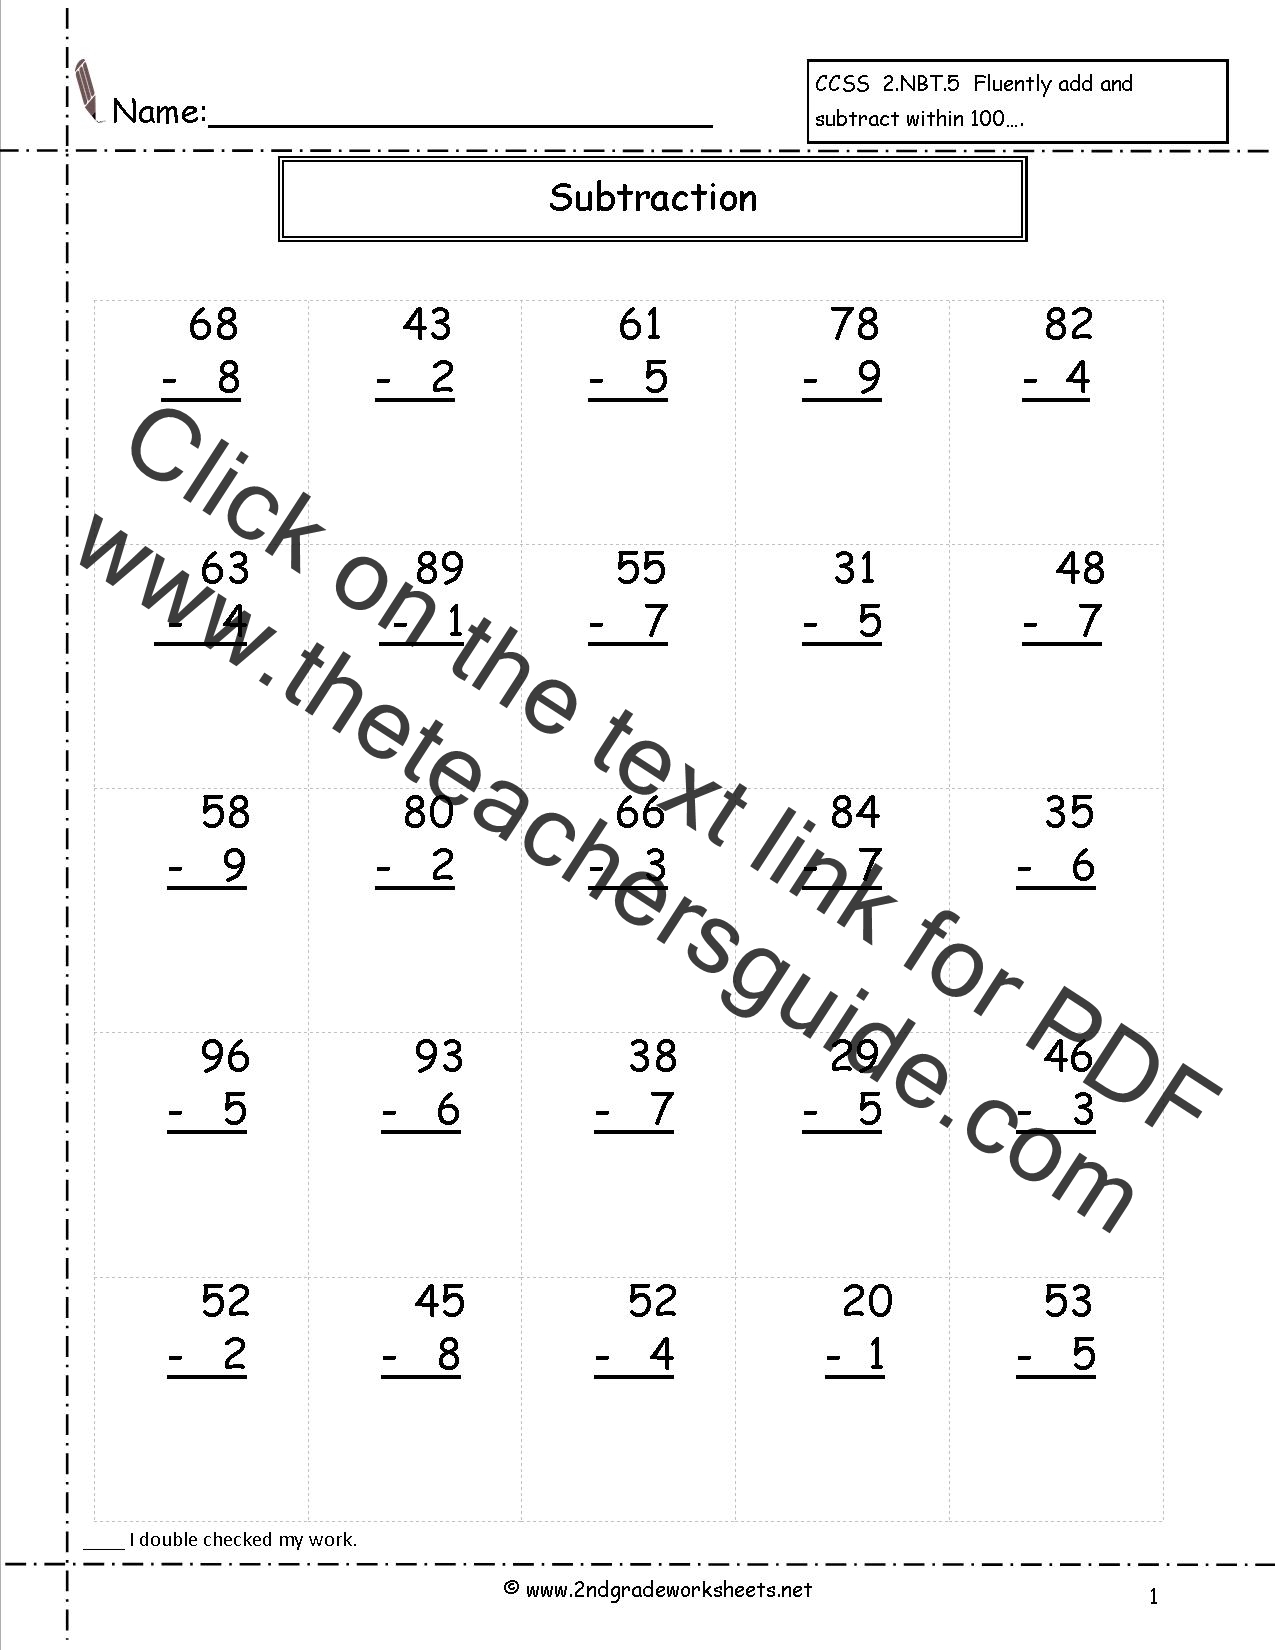 subtraction-2-digits-worksheets